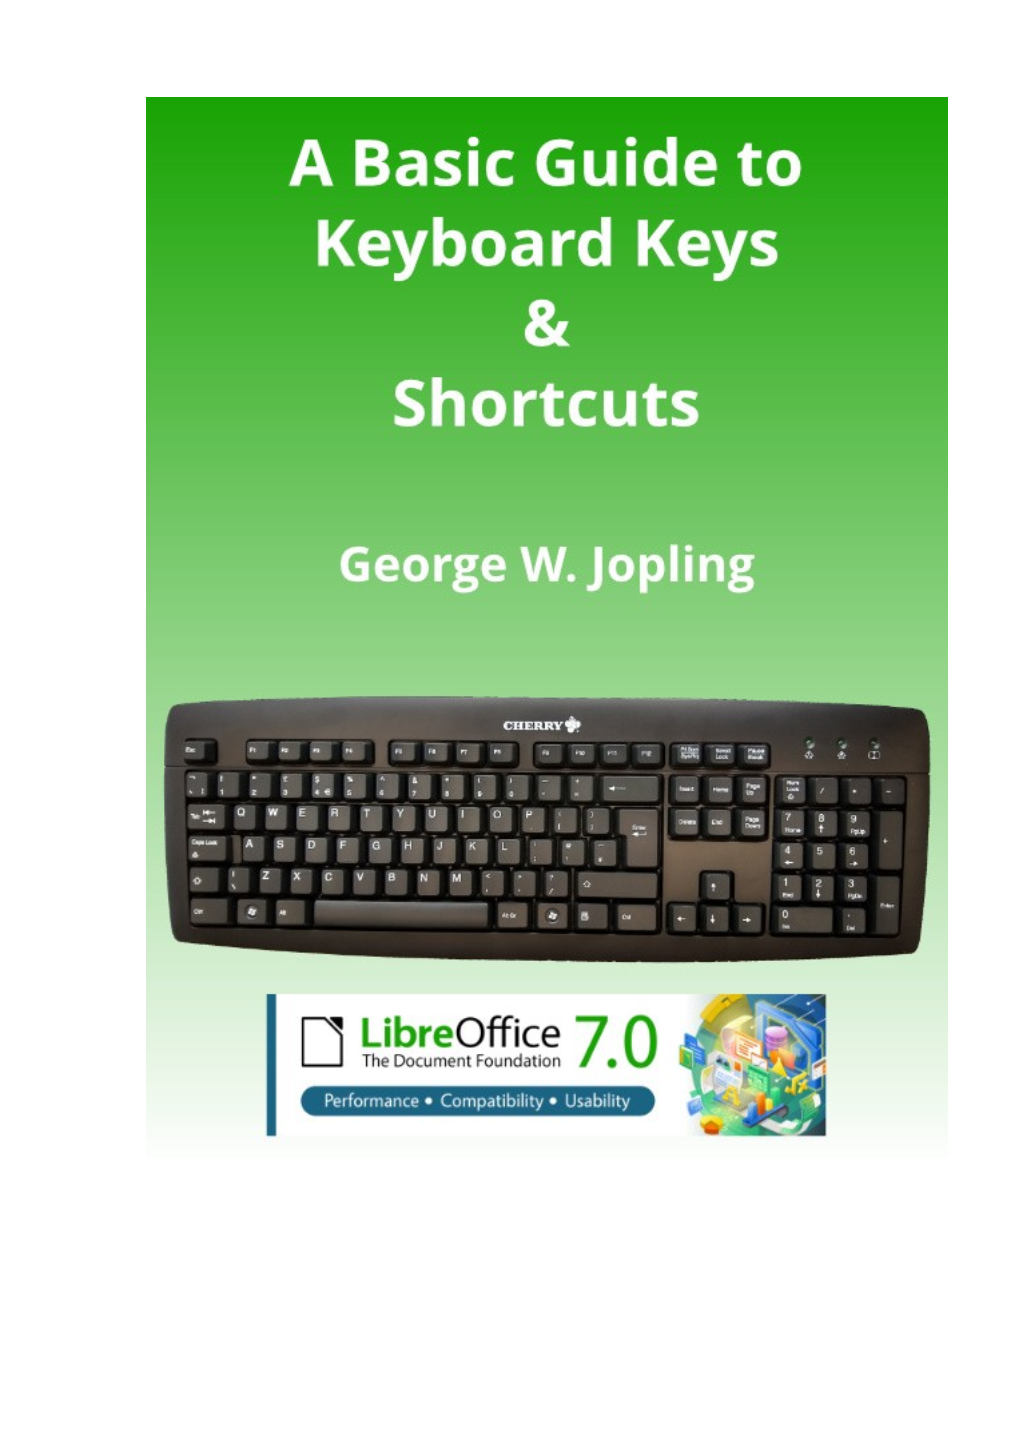 A Basic Guide to Keyboard Keys & Shortcuts